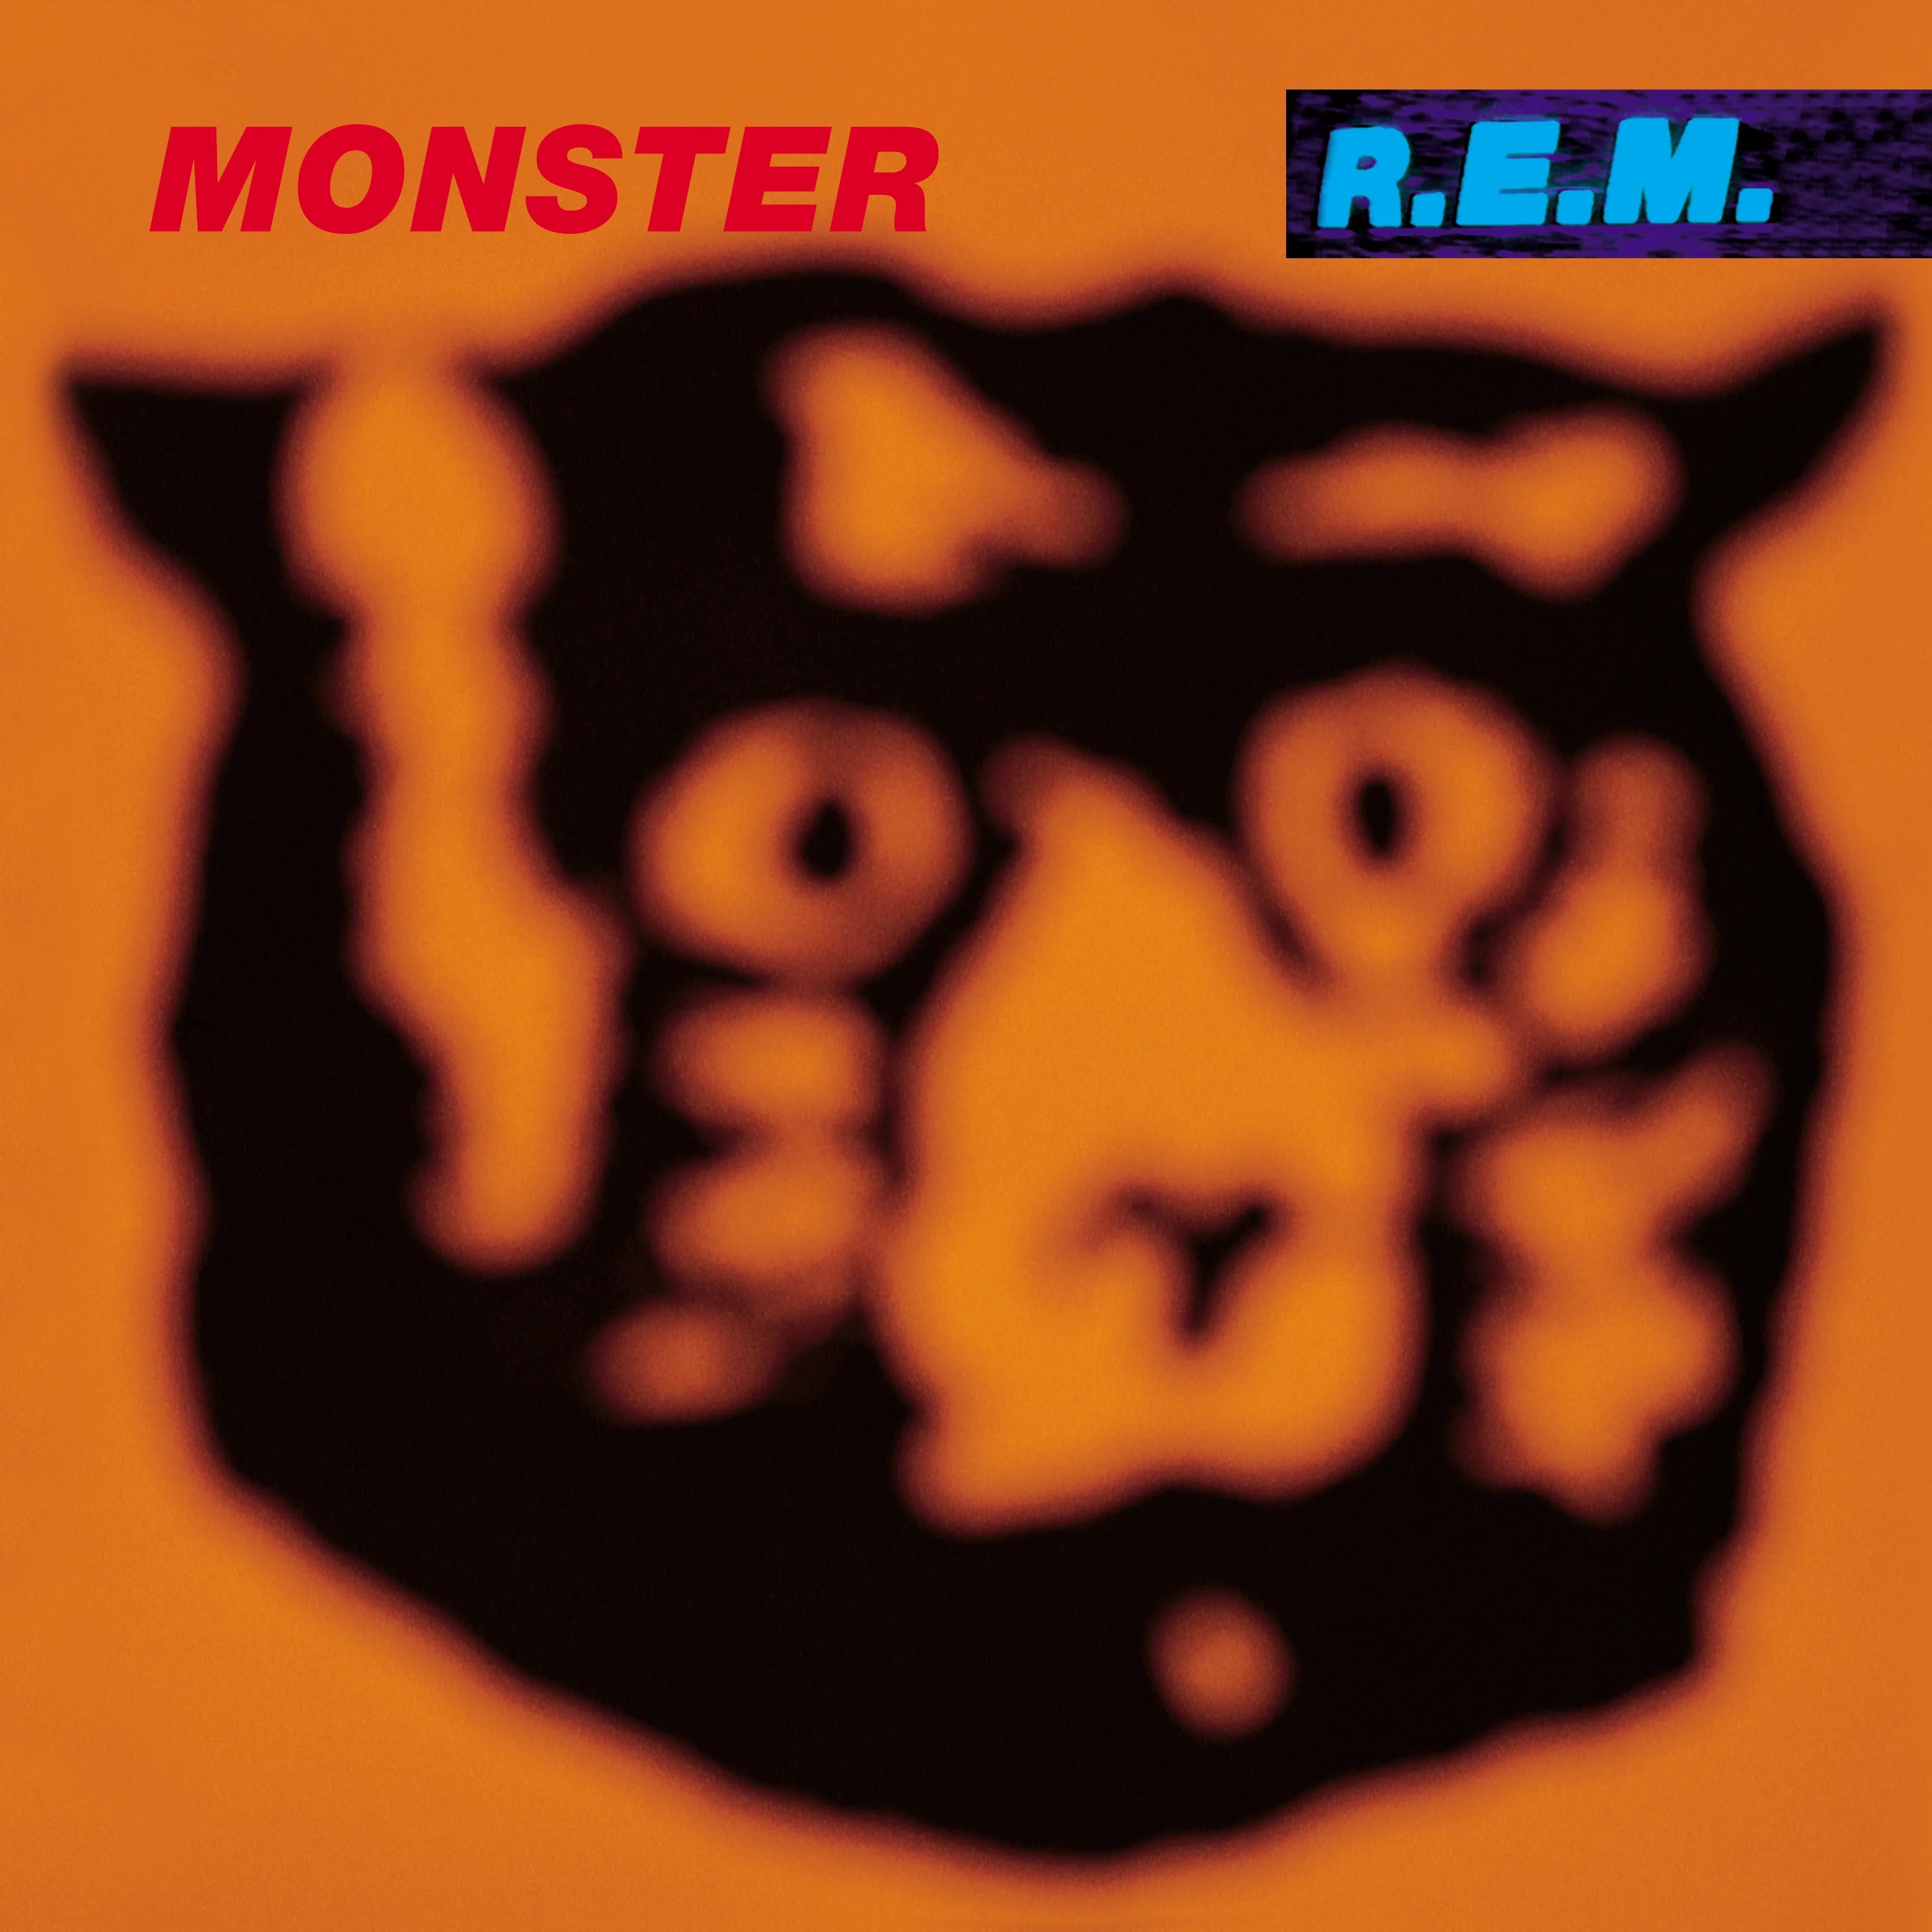 R.E.M. — Bang and Blame cover artwork